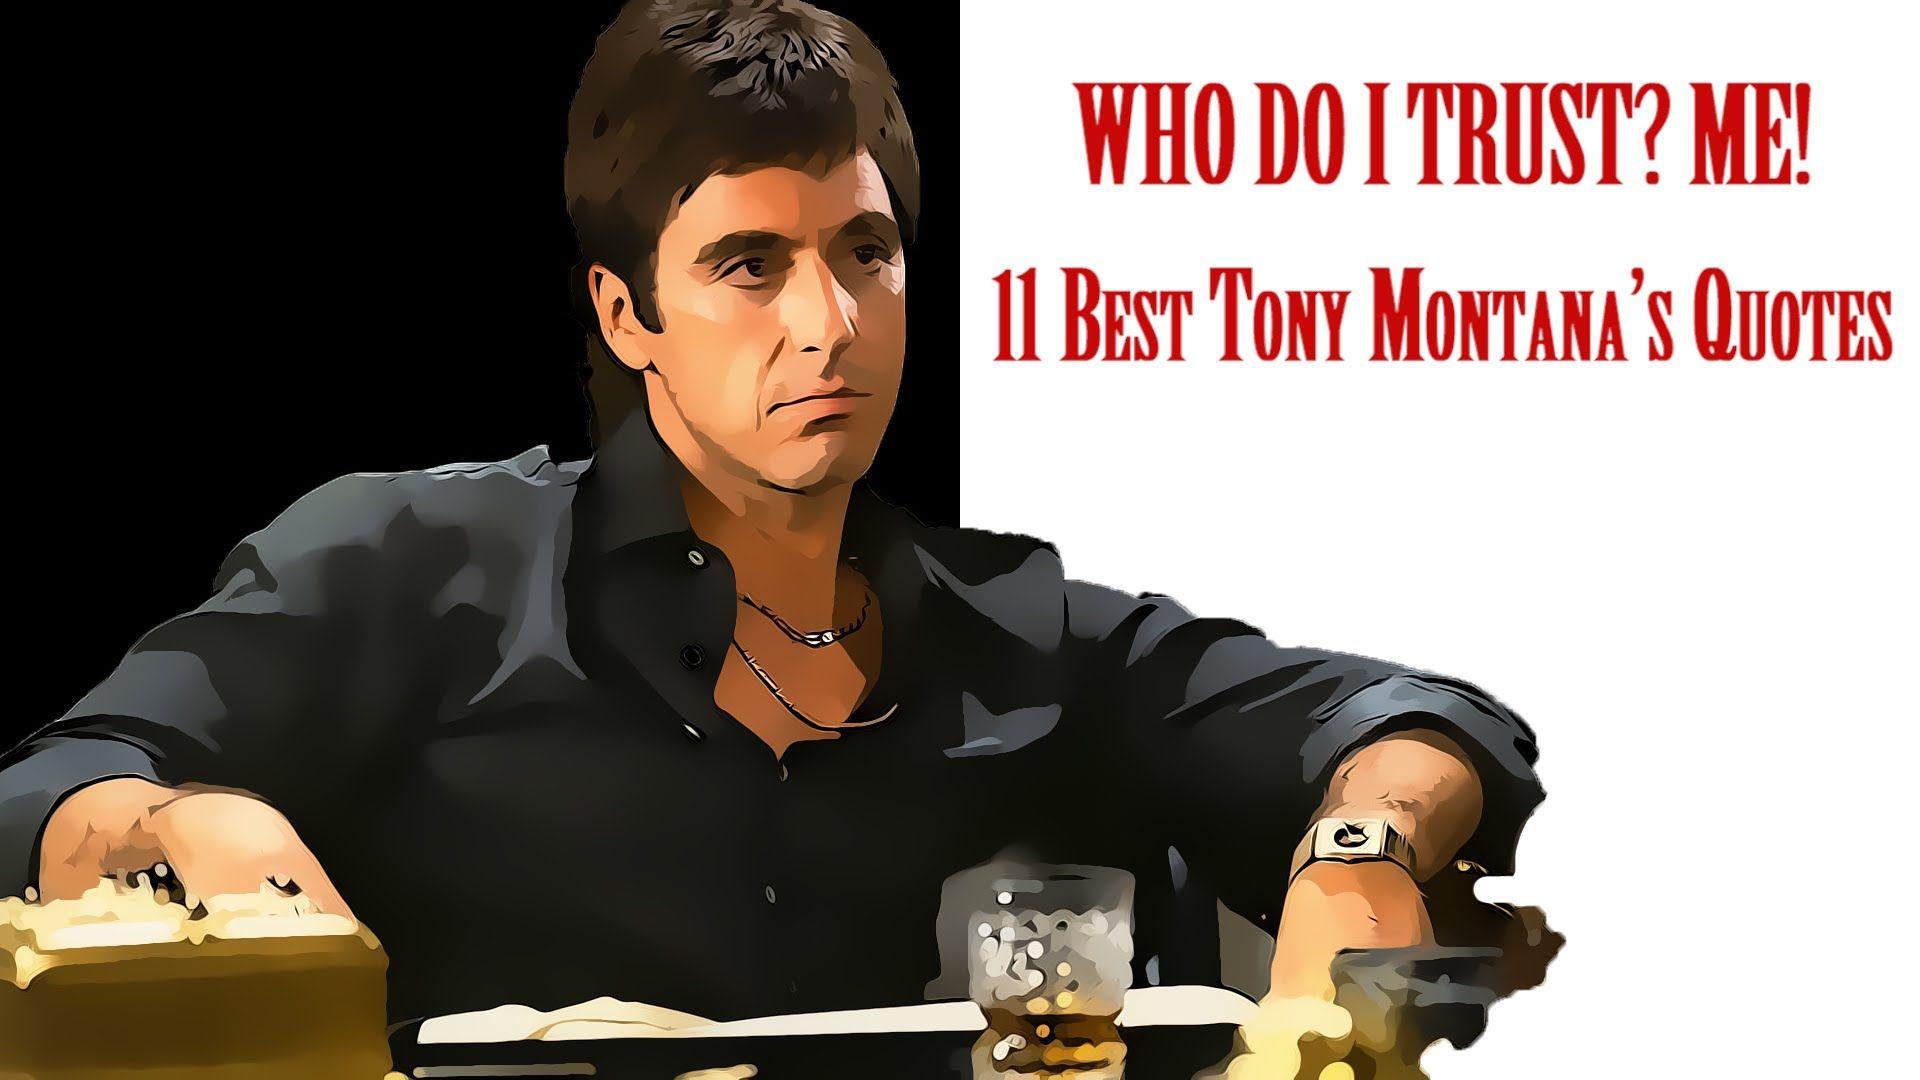 Who do I trust? Me! 11 Best Tony Montana's Quotes